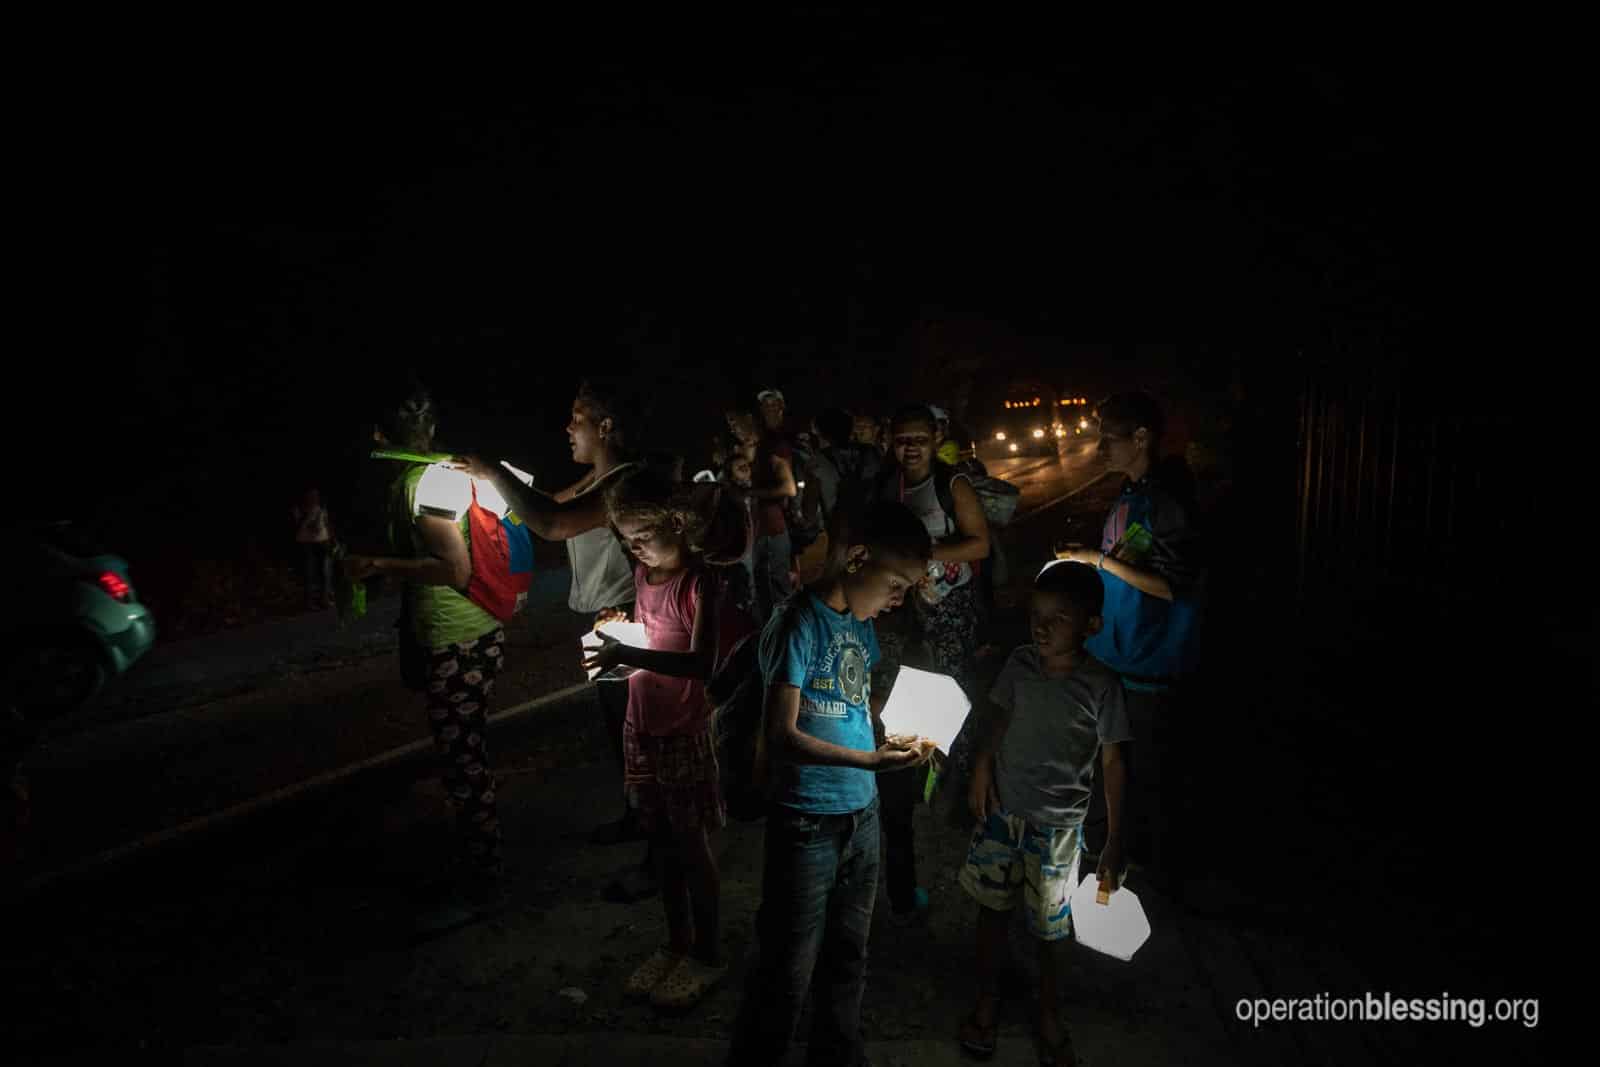 Venenzuelan refugees receive solar lights from Operation Blessing along a dangerous road.